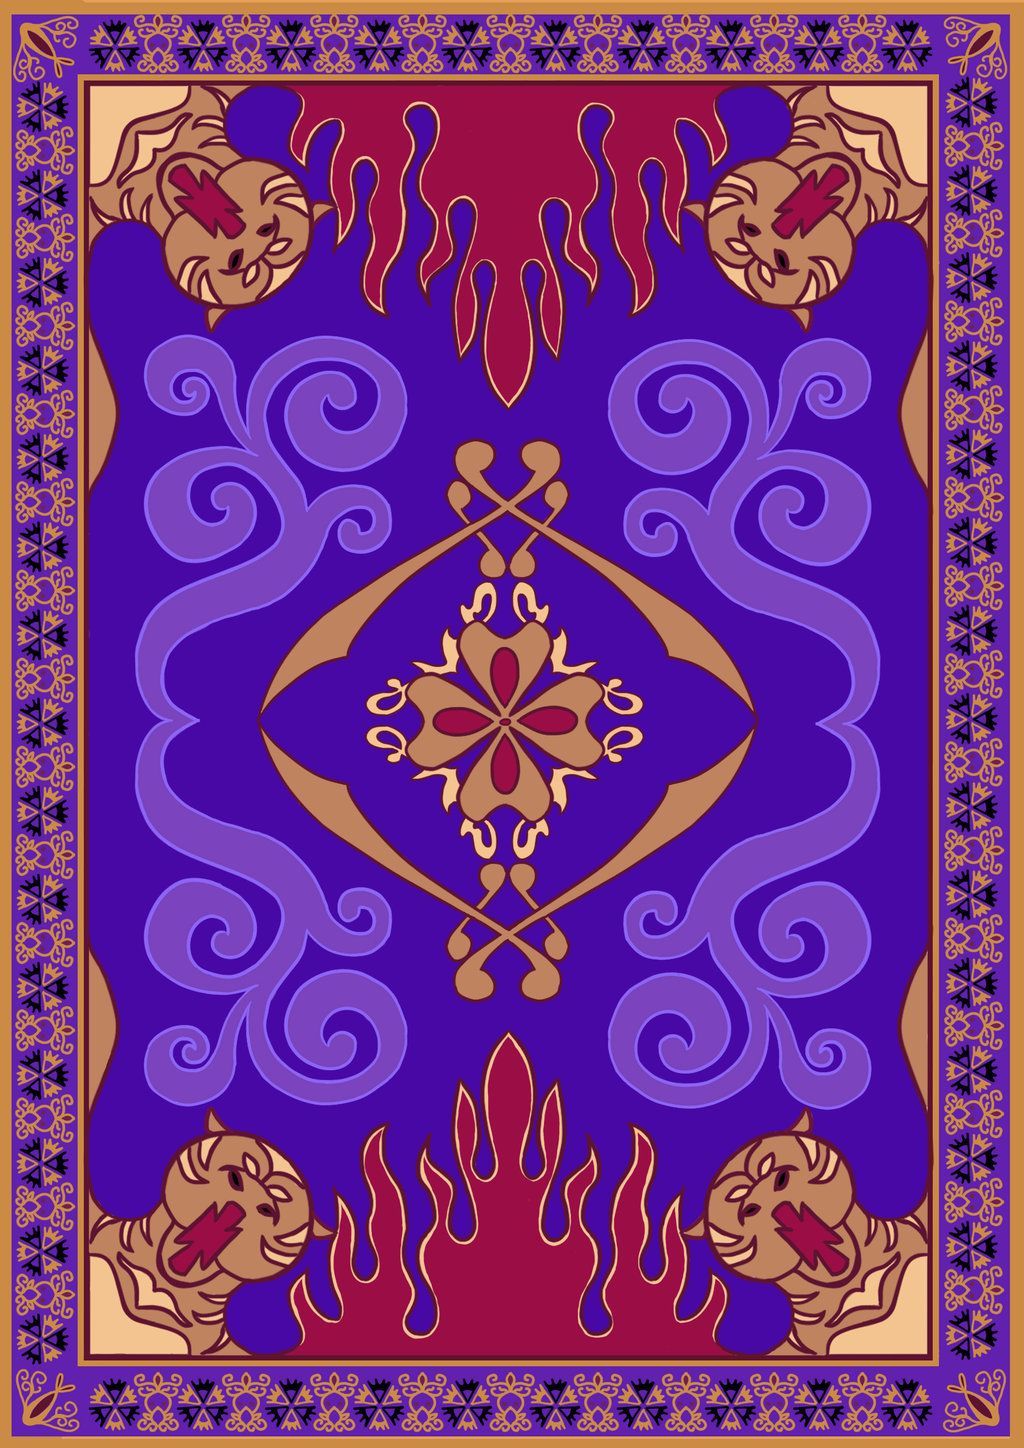 Magic Carpet by Sydonz. Aladdin wallpaper, Aladdin carpet